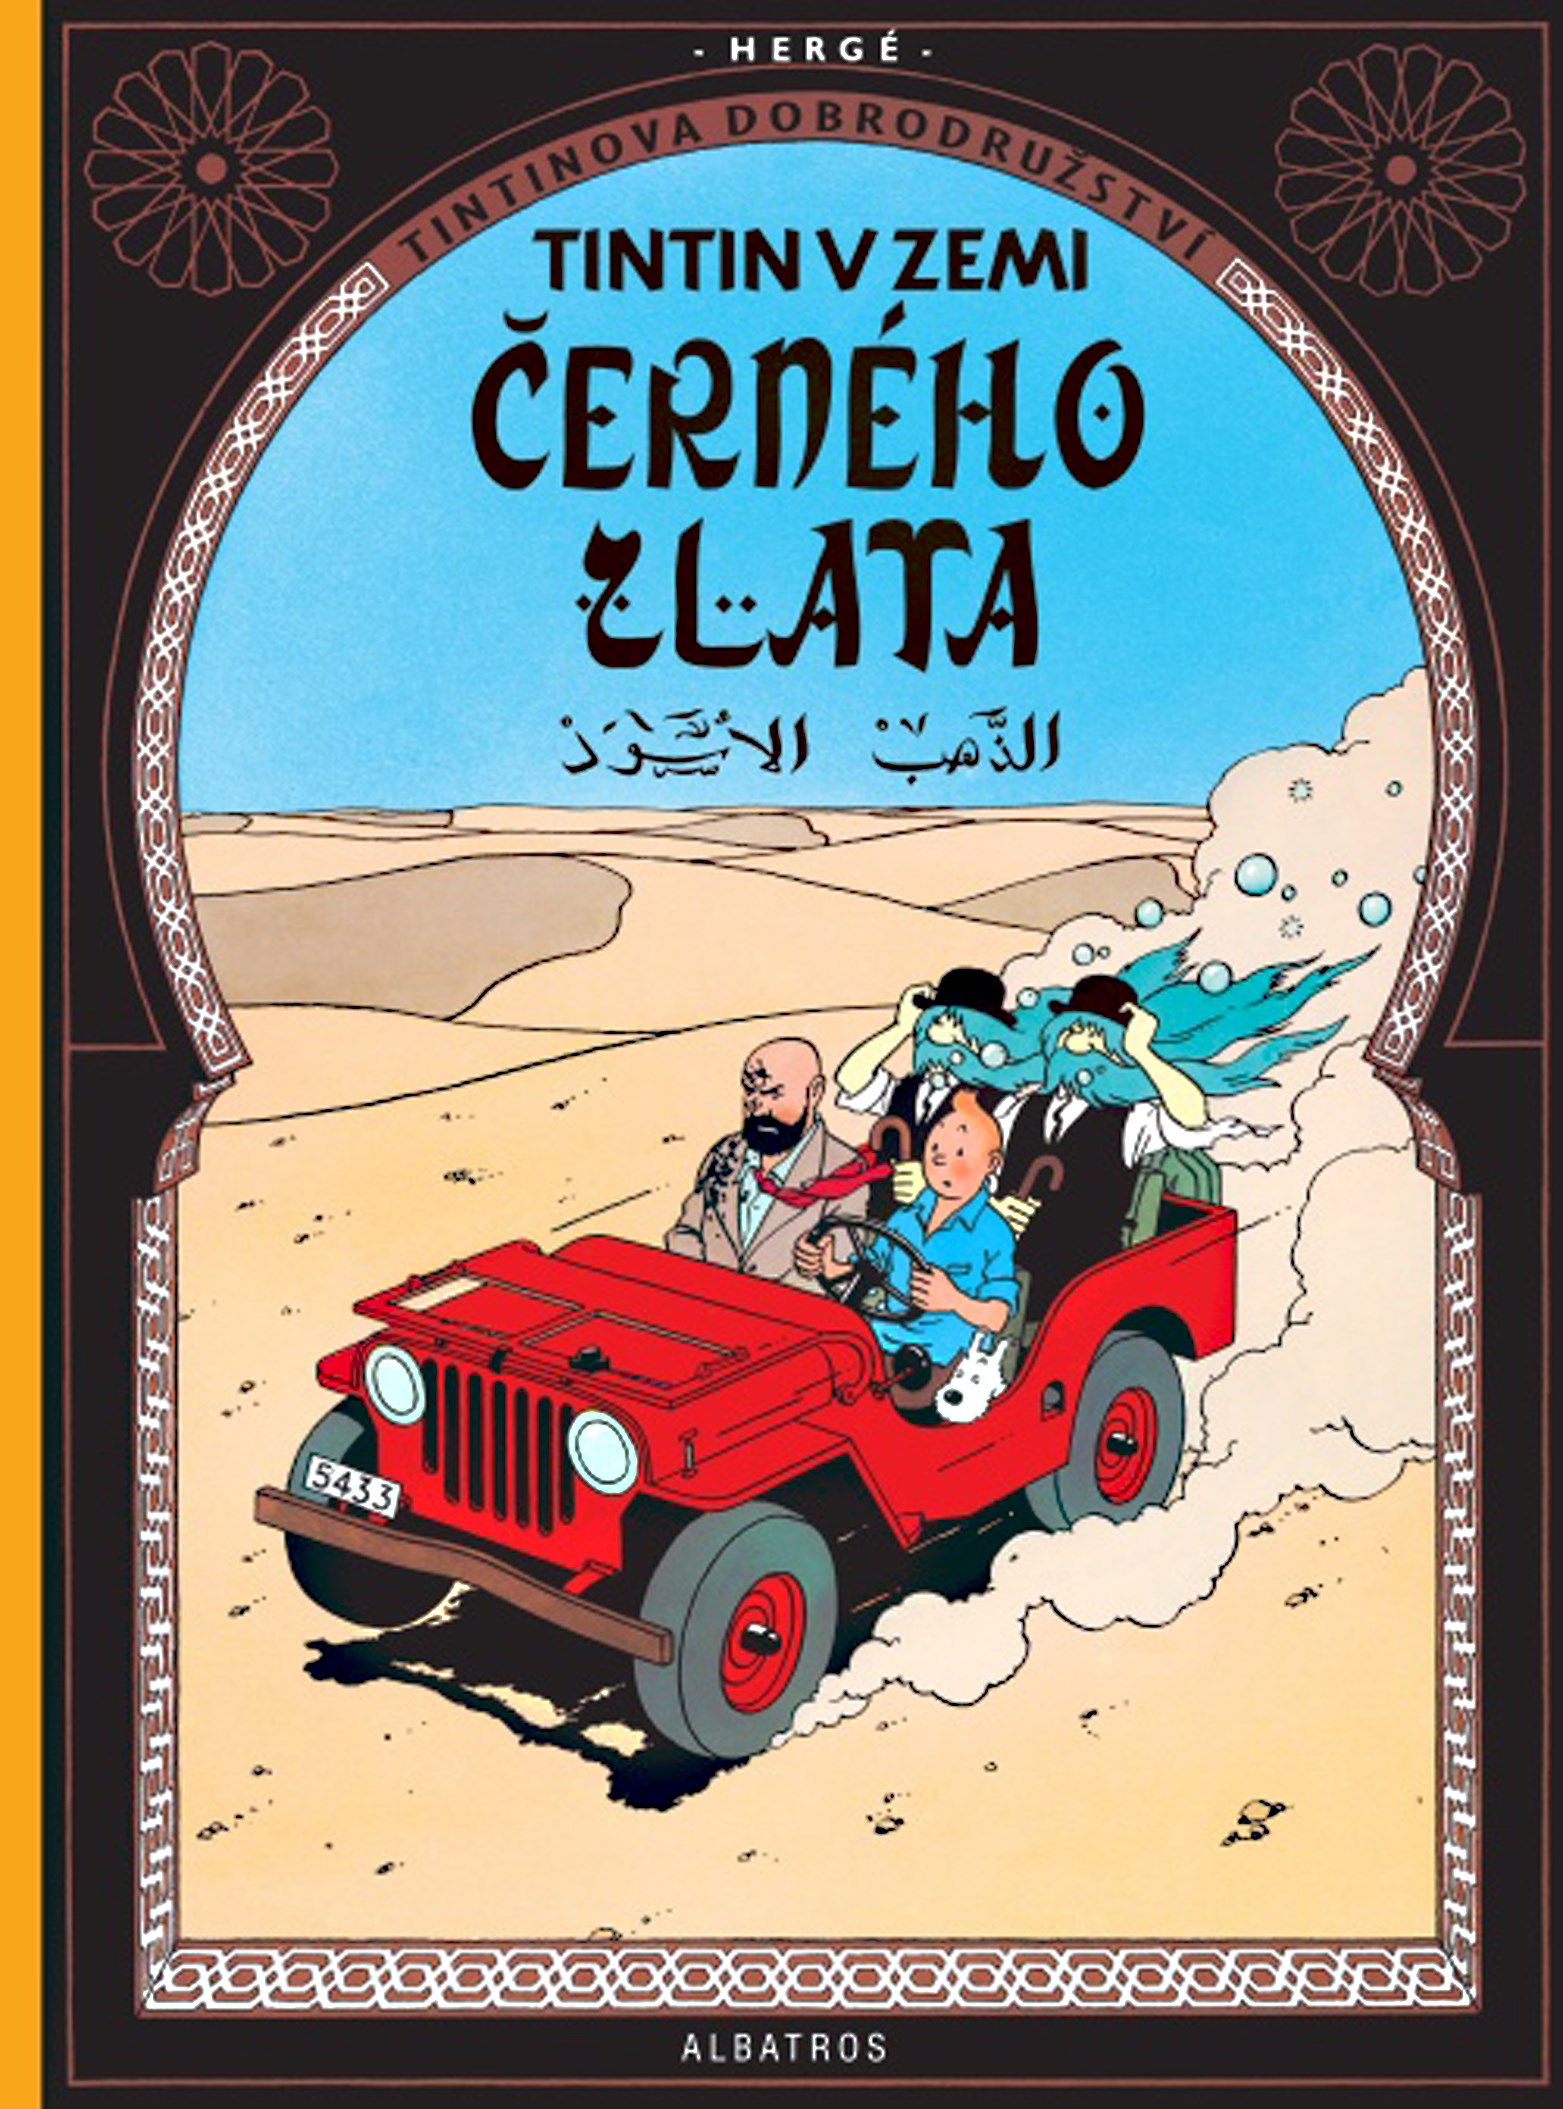 Tintin 15 - Tintin v zemi černého zlata [Hergé]